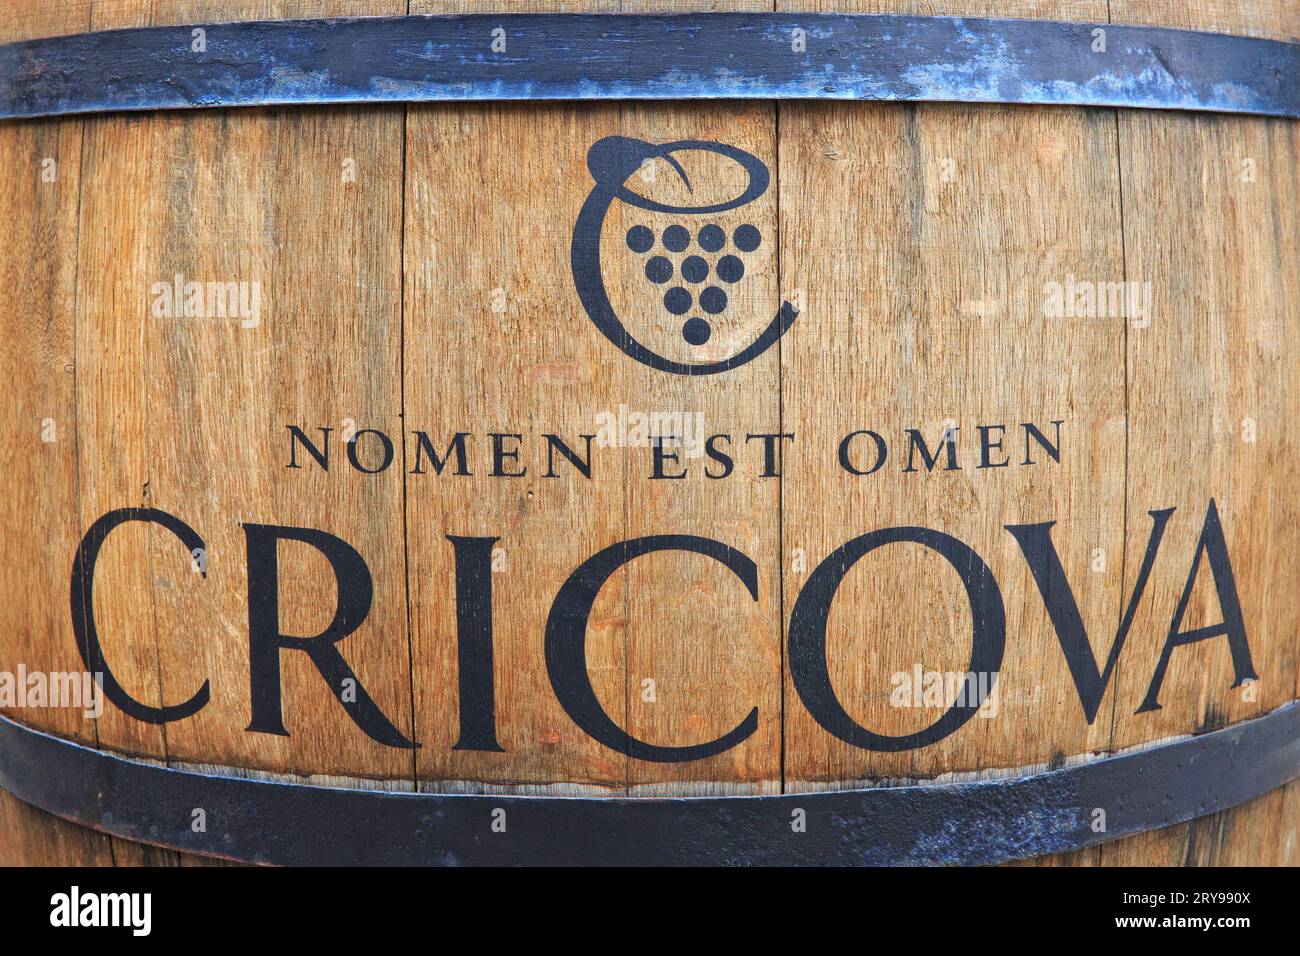 Close-up of a barrel at the Cricova Winery in Cricova, Moldova Stock Photo